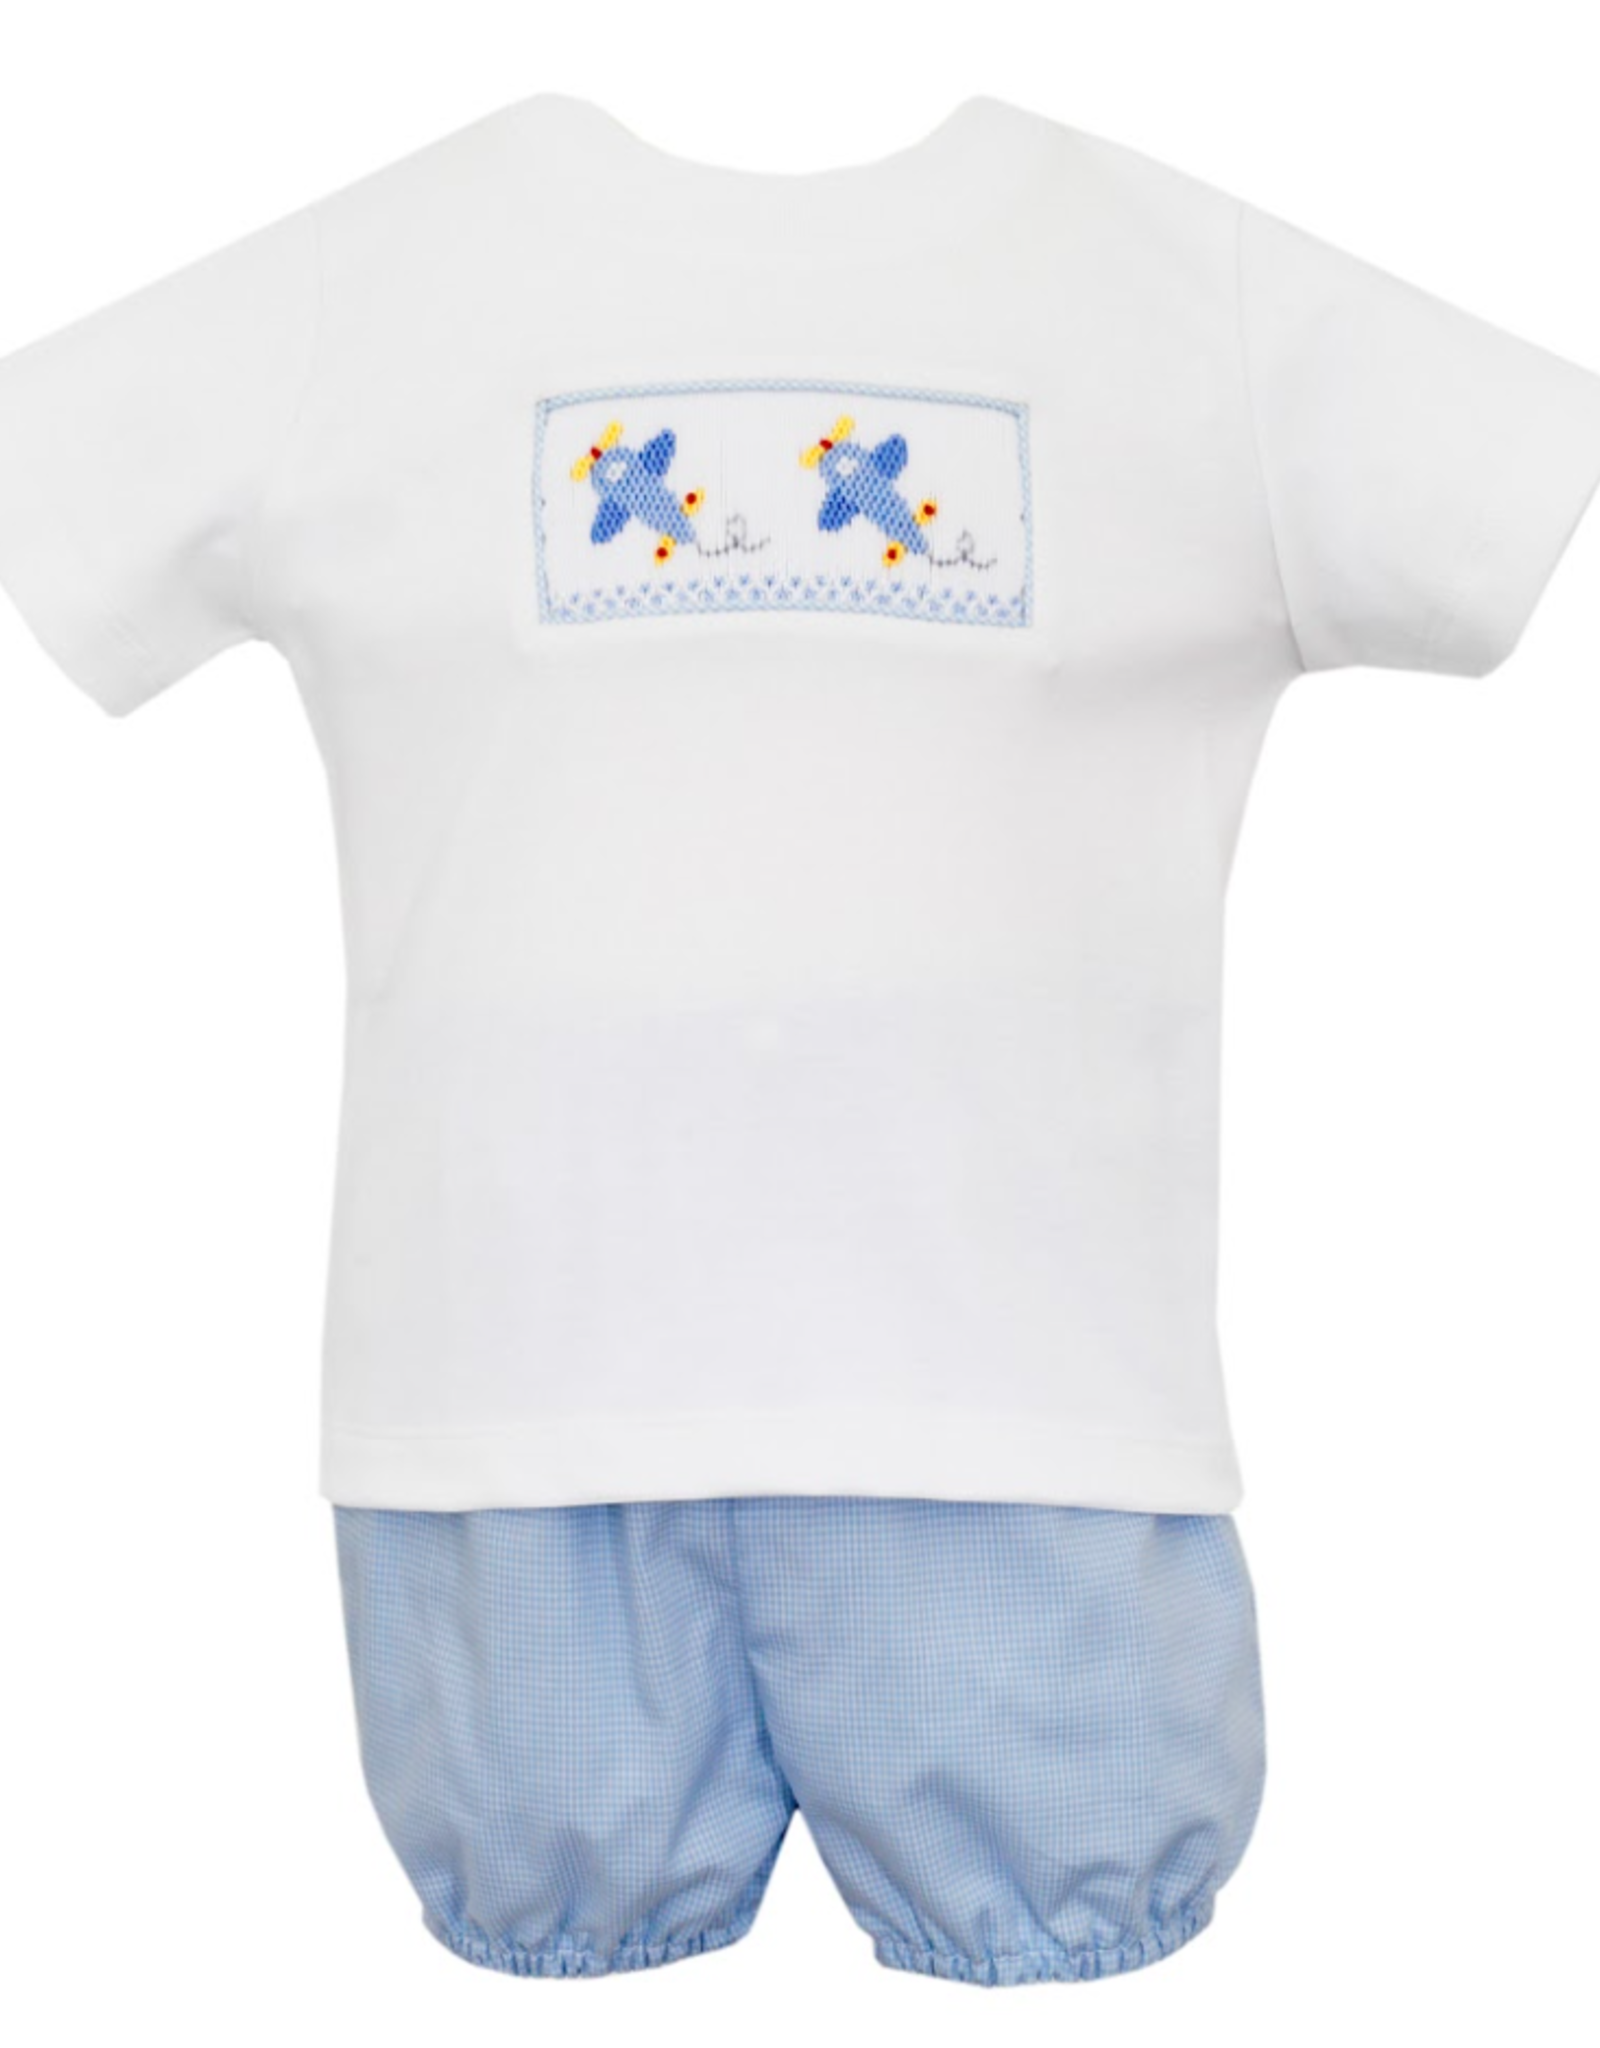 Anavini Airplane Blue Gingham T-Shirt Bloomer Set